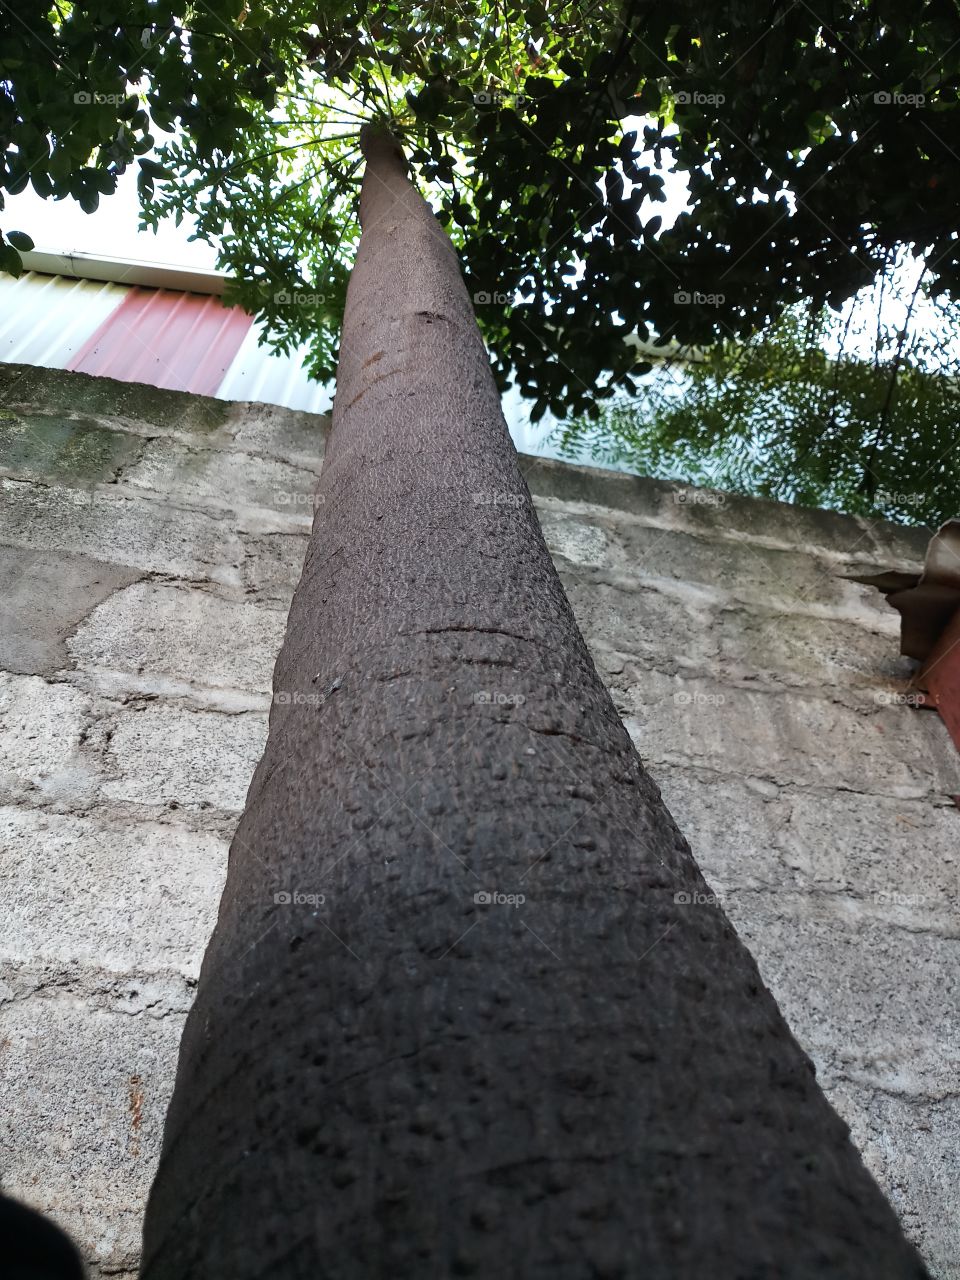 longer tree